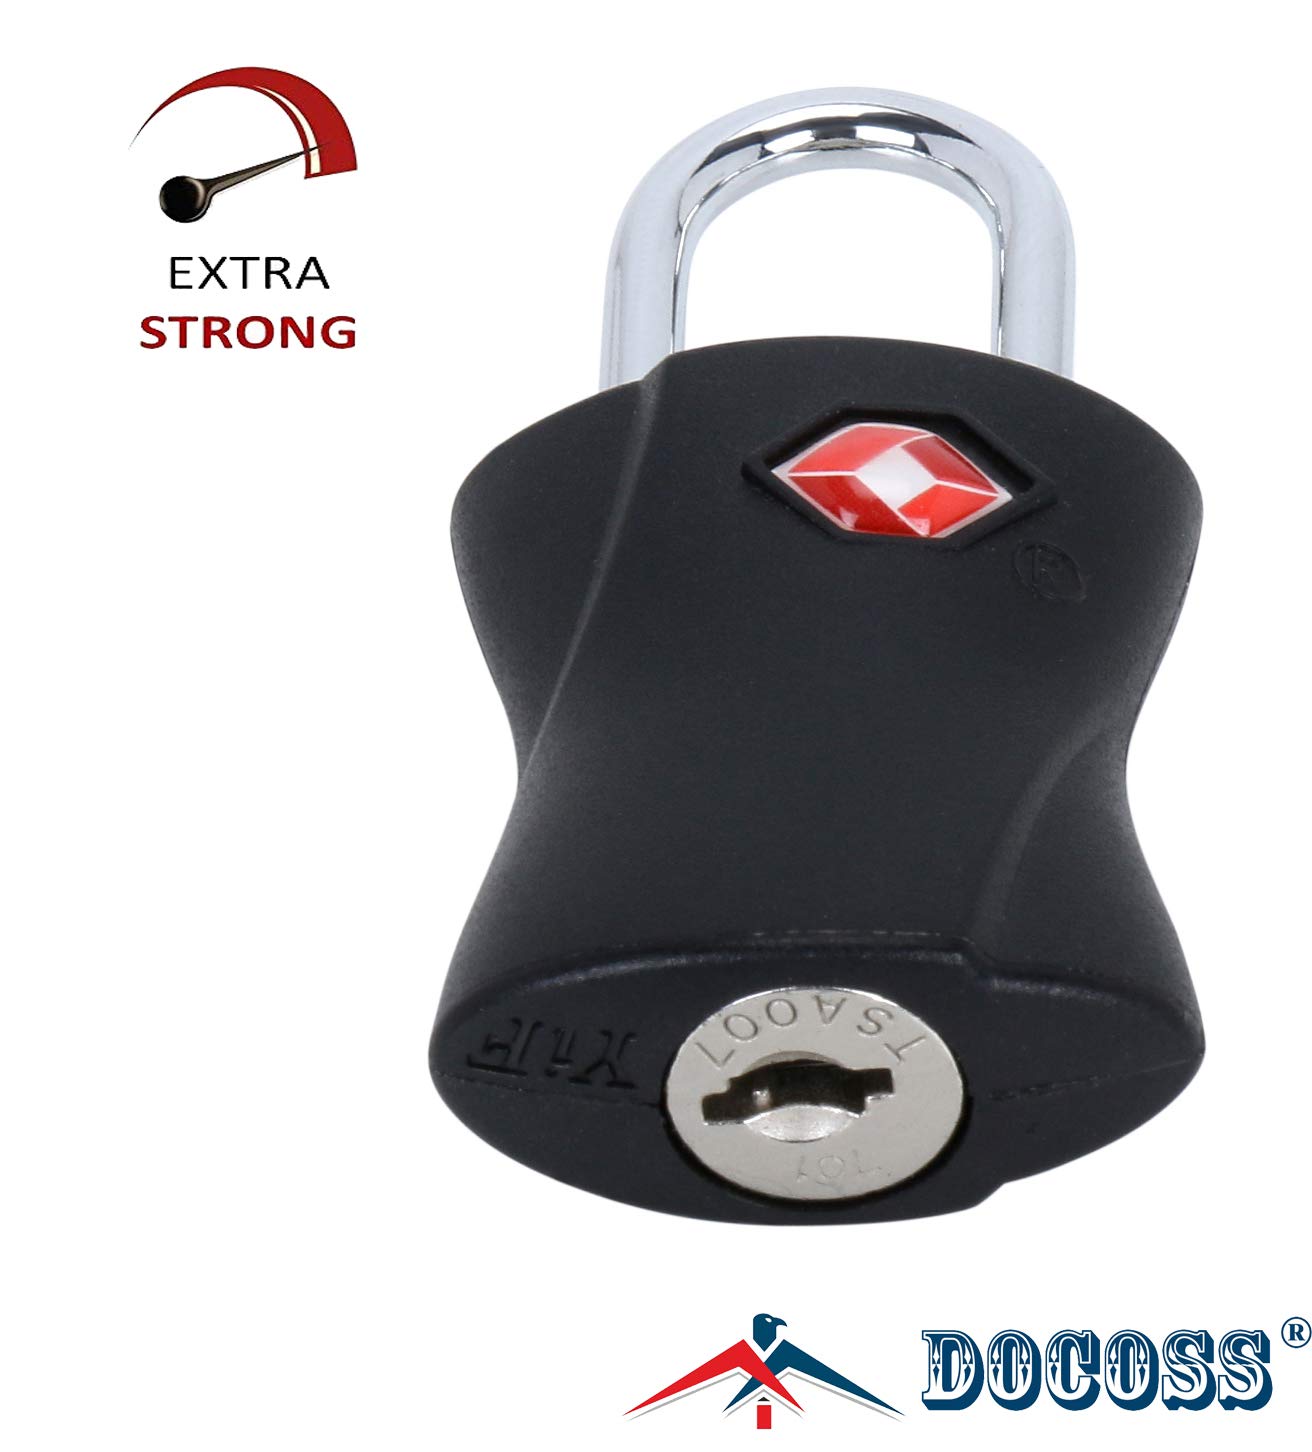 DOCOSS-Pack of 2-Metal Lock TSA Approved With Keys International Lock for Bag luggage Travelling Locks Padlock (Black)